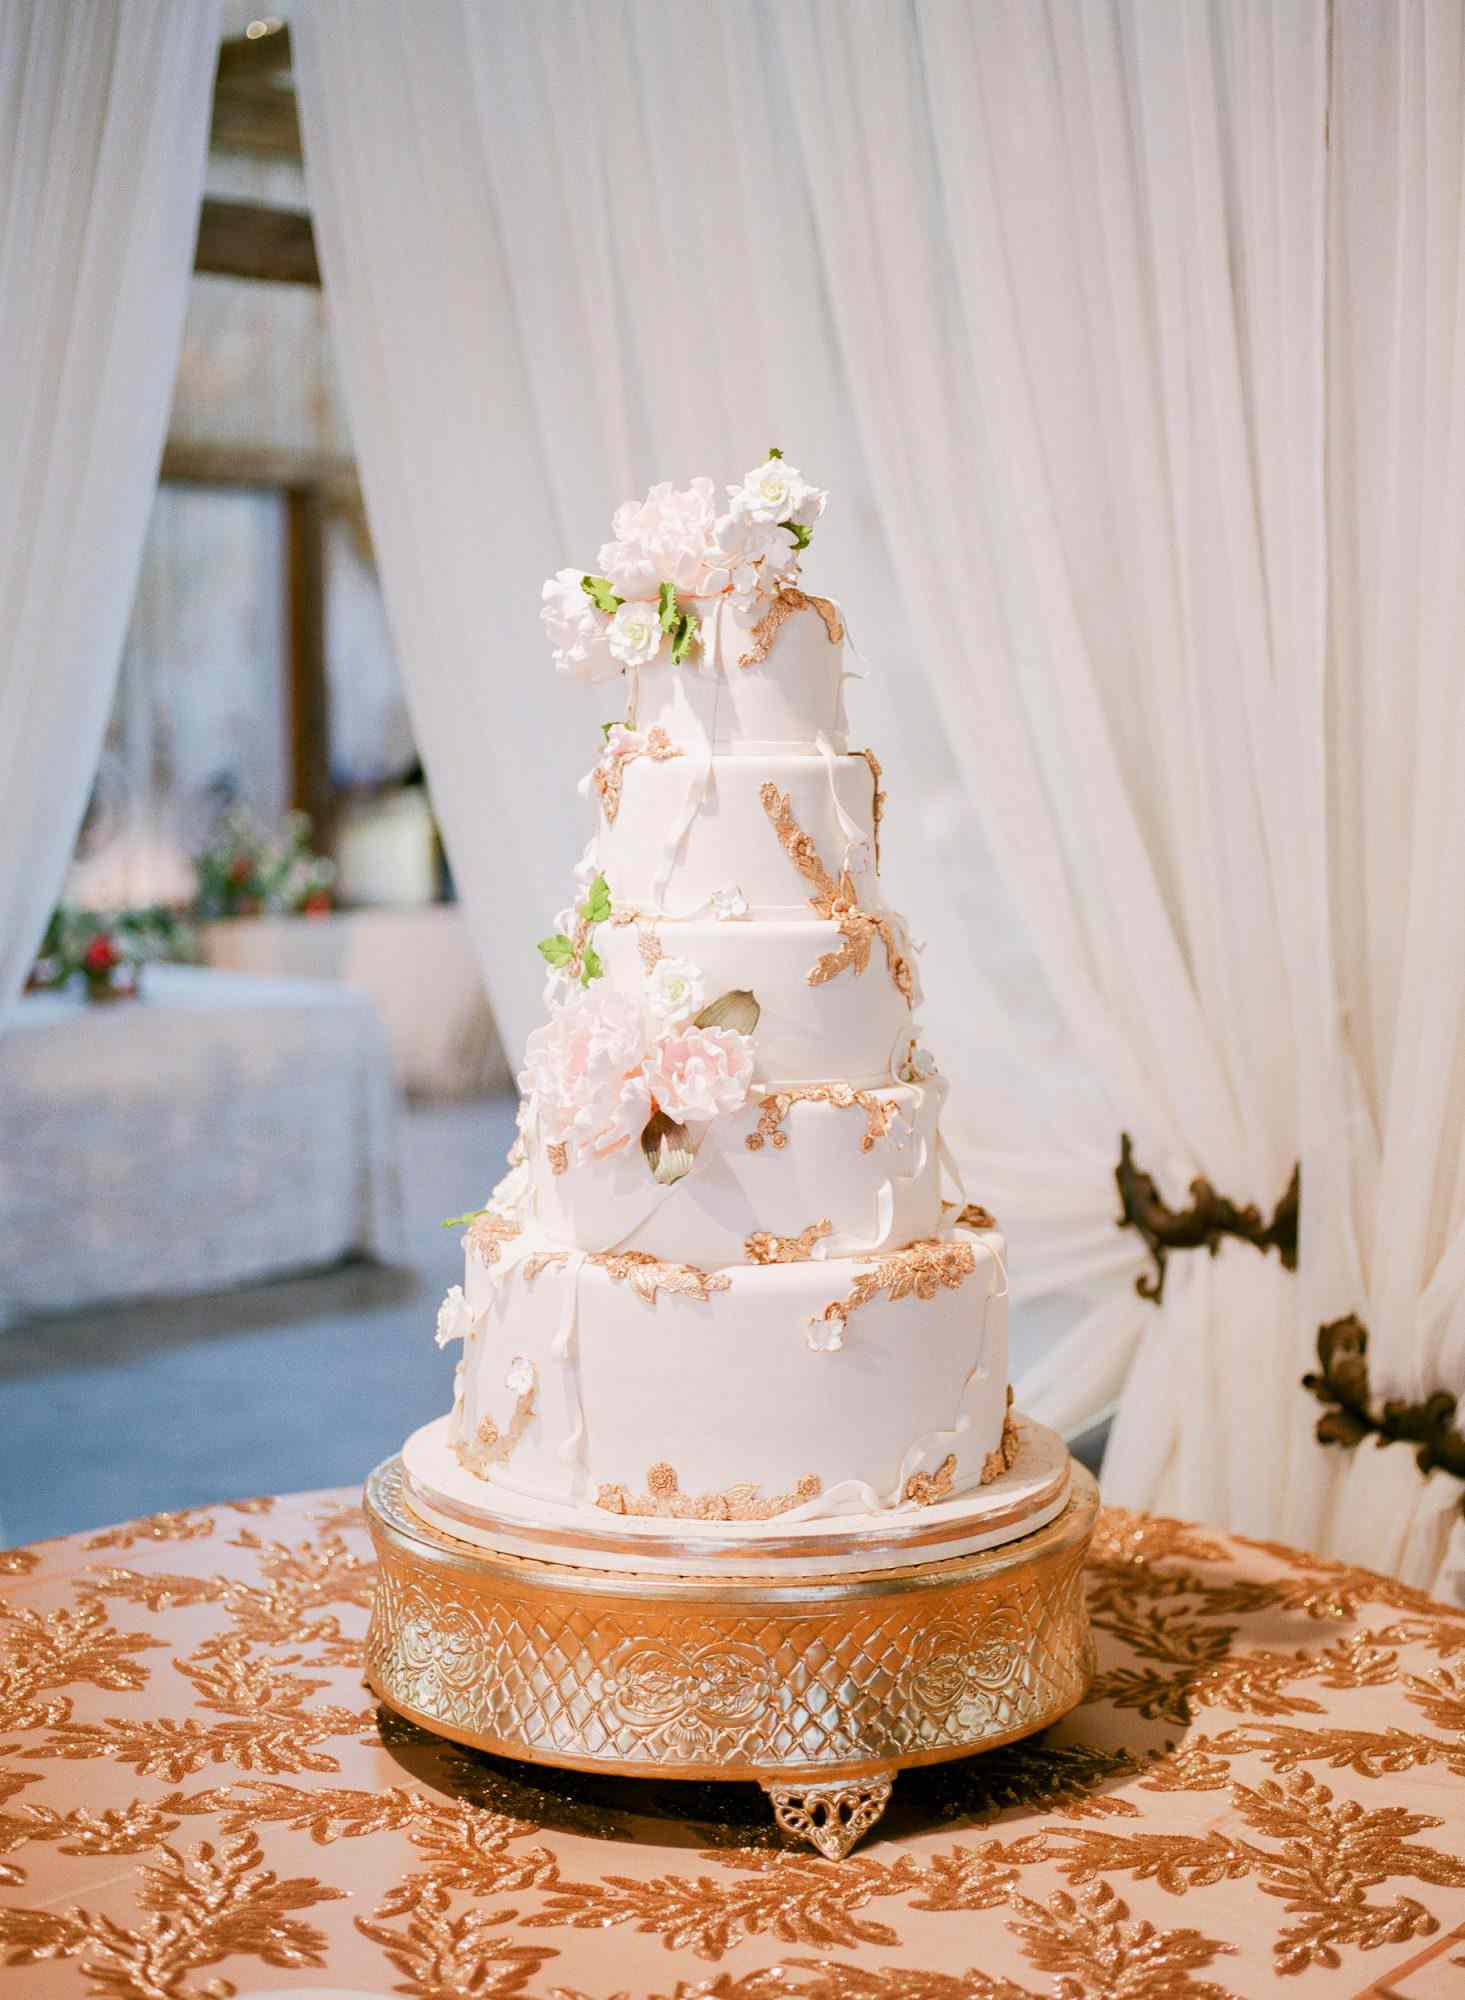 suzanne joseph wedding cake corbin gurkin